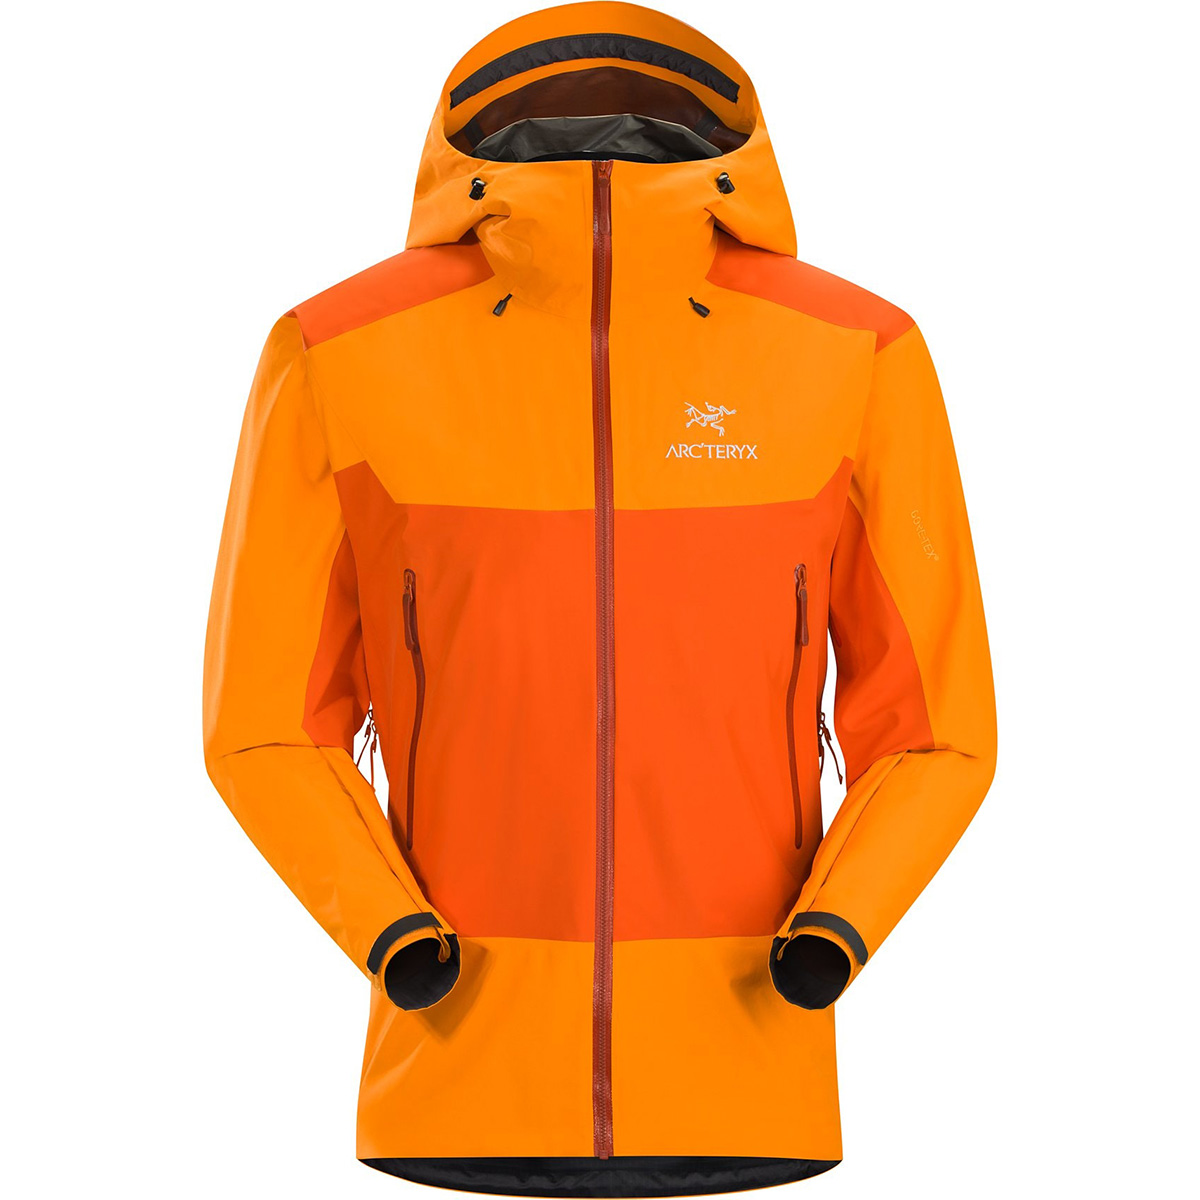 Beta SL Hybrid Jacket, men's, discontinued Spring 2019 colors